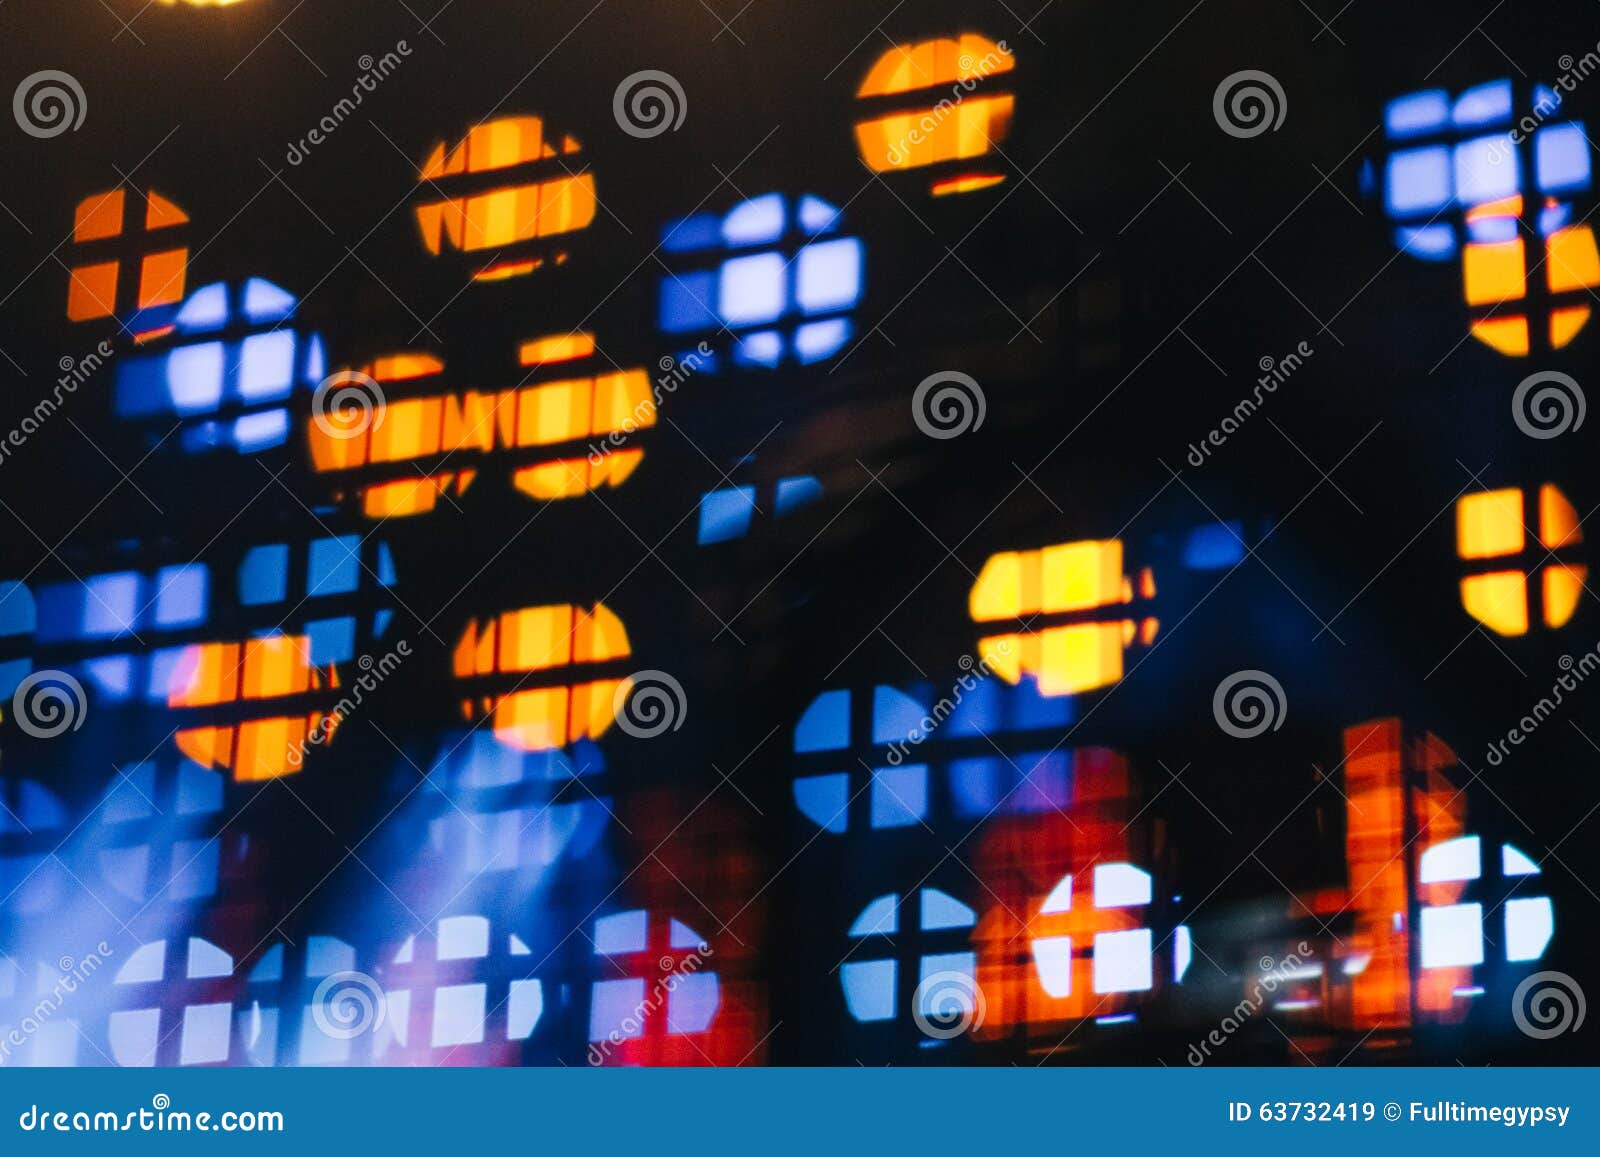 blurred defocused spotlights